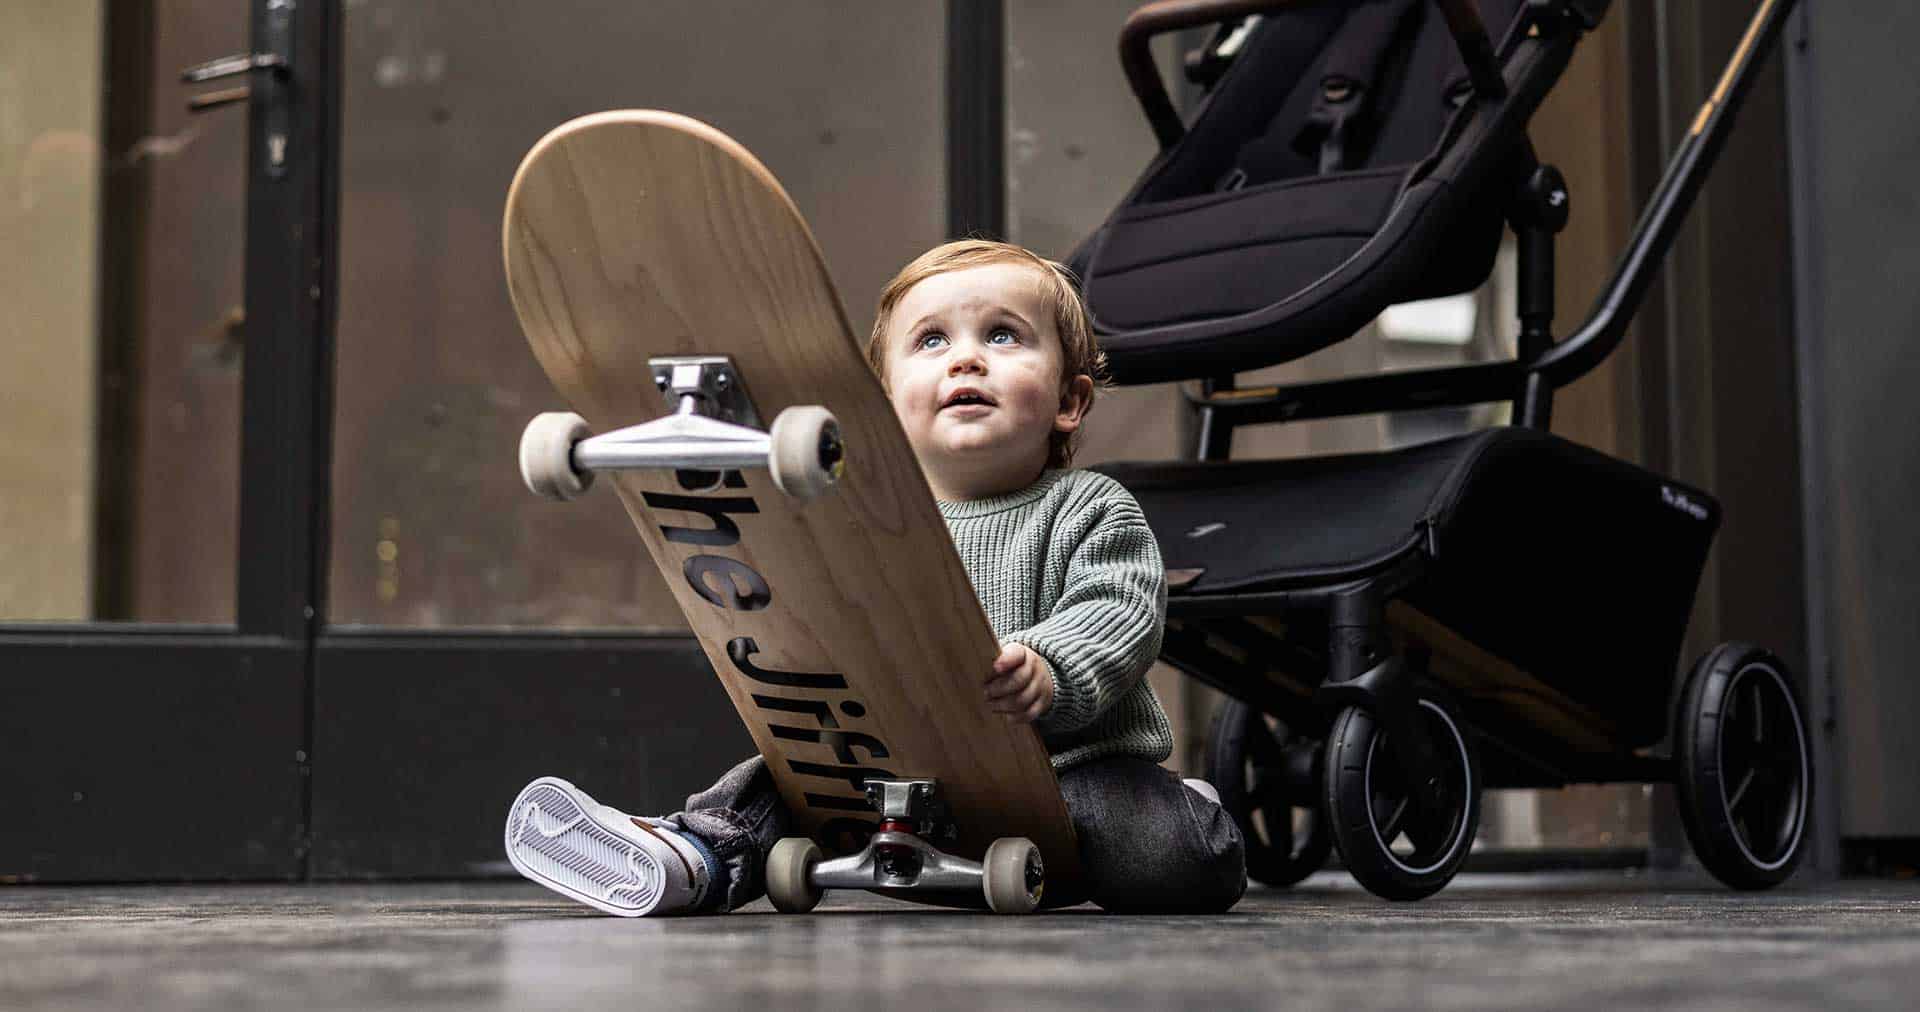 Skateboard met kleintje The Jiffle wagon op de achtergrond